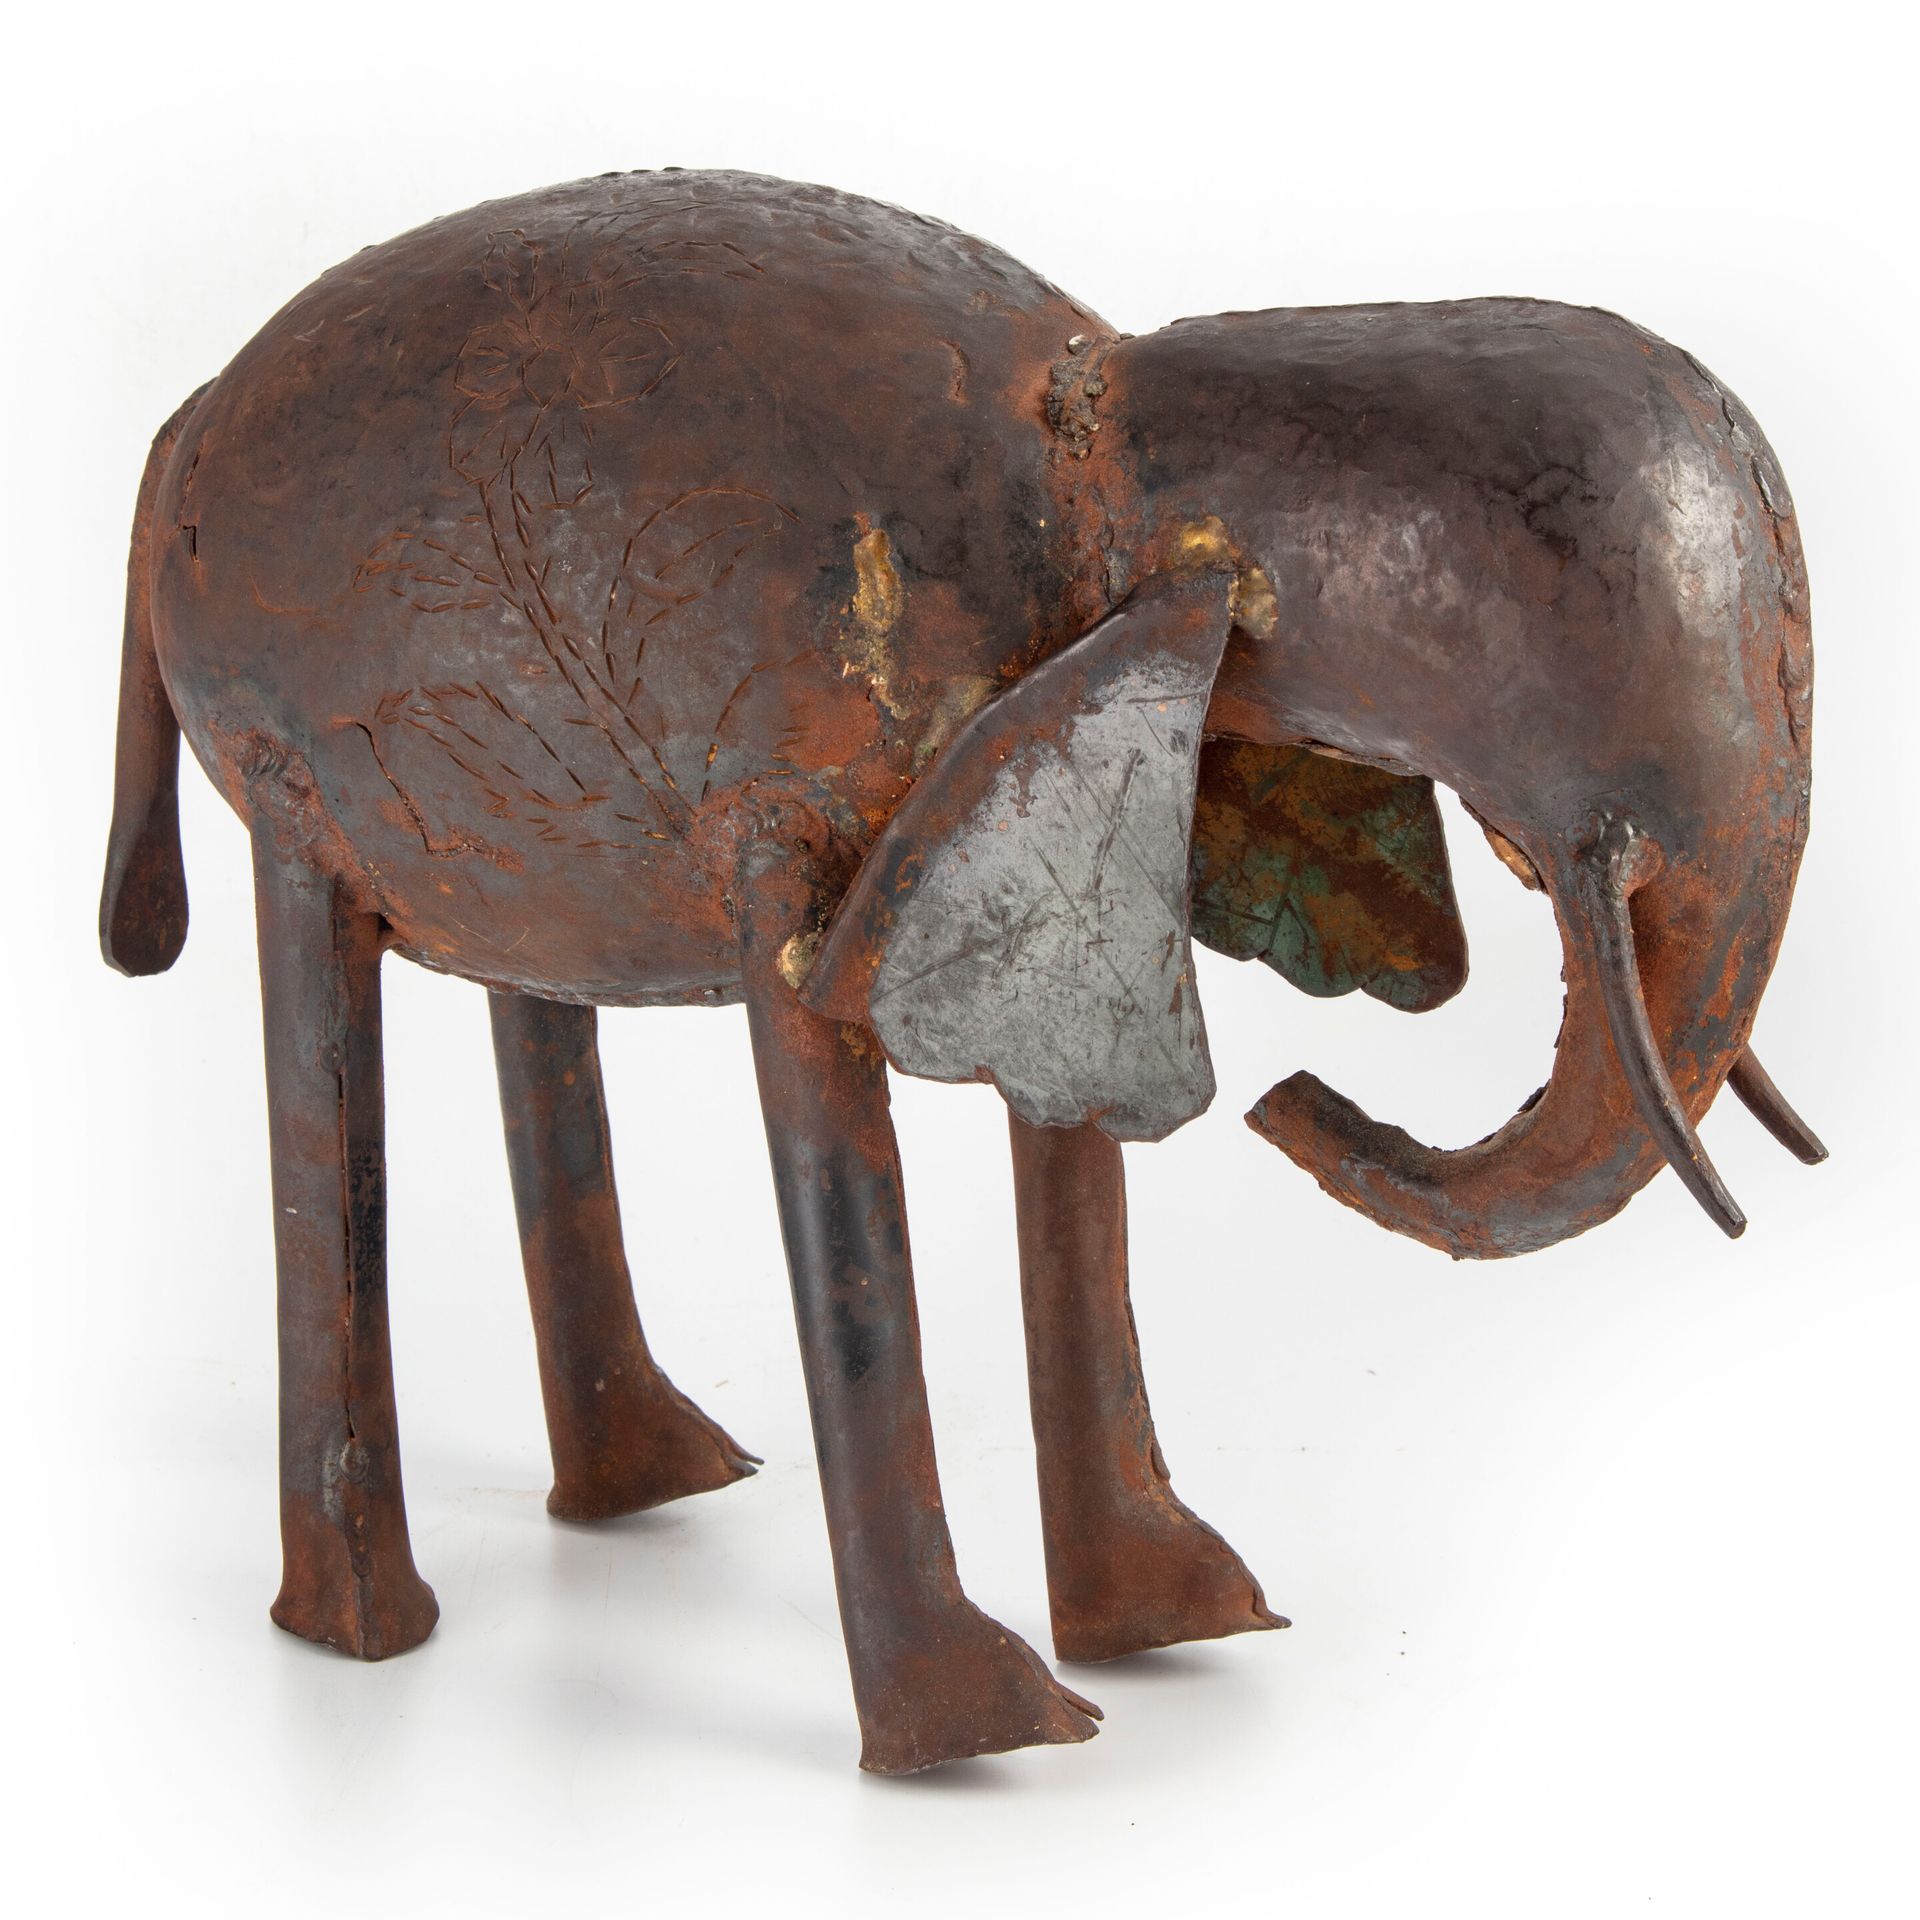 Null Estatuilla de elefante de metal martillado. Obra india

H. 28 - L 34 cm